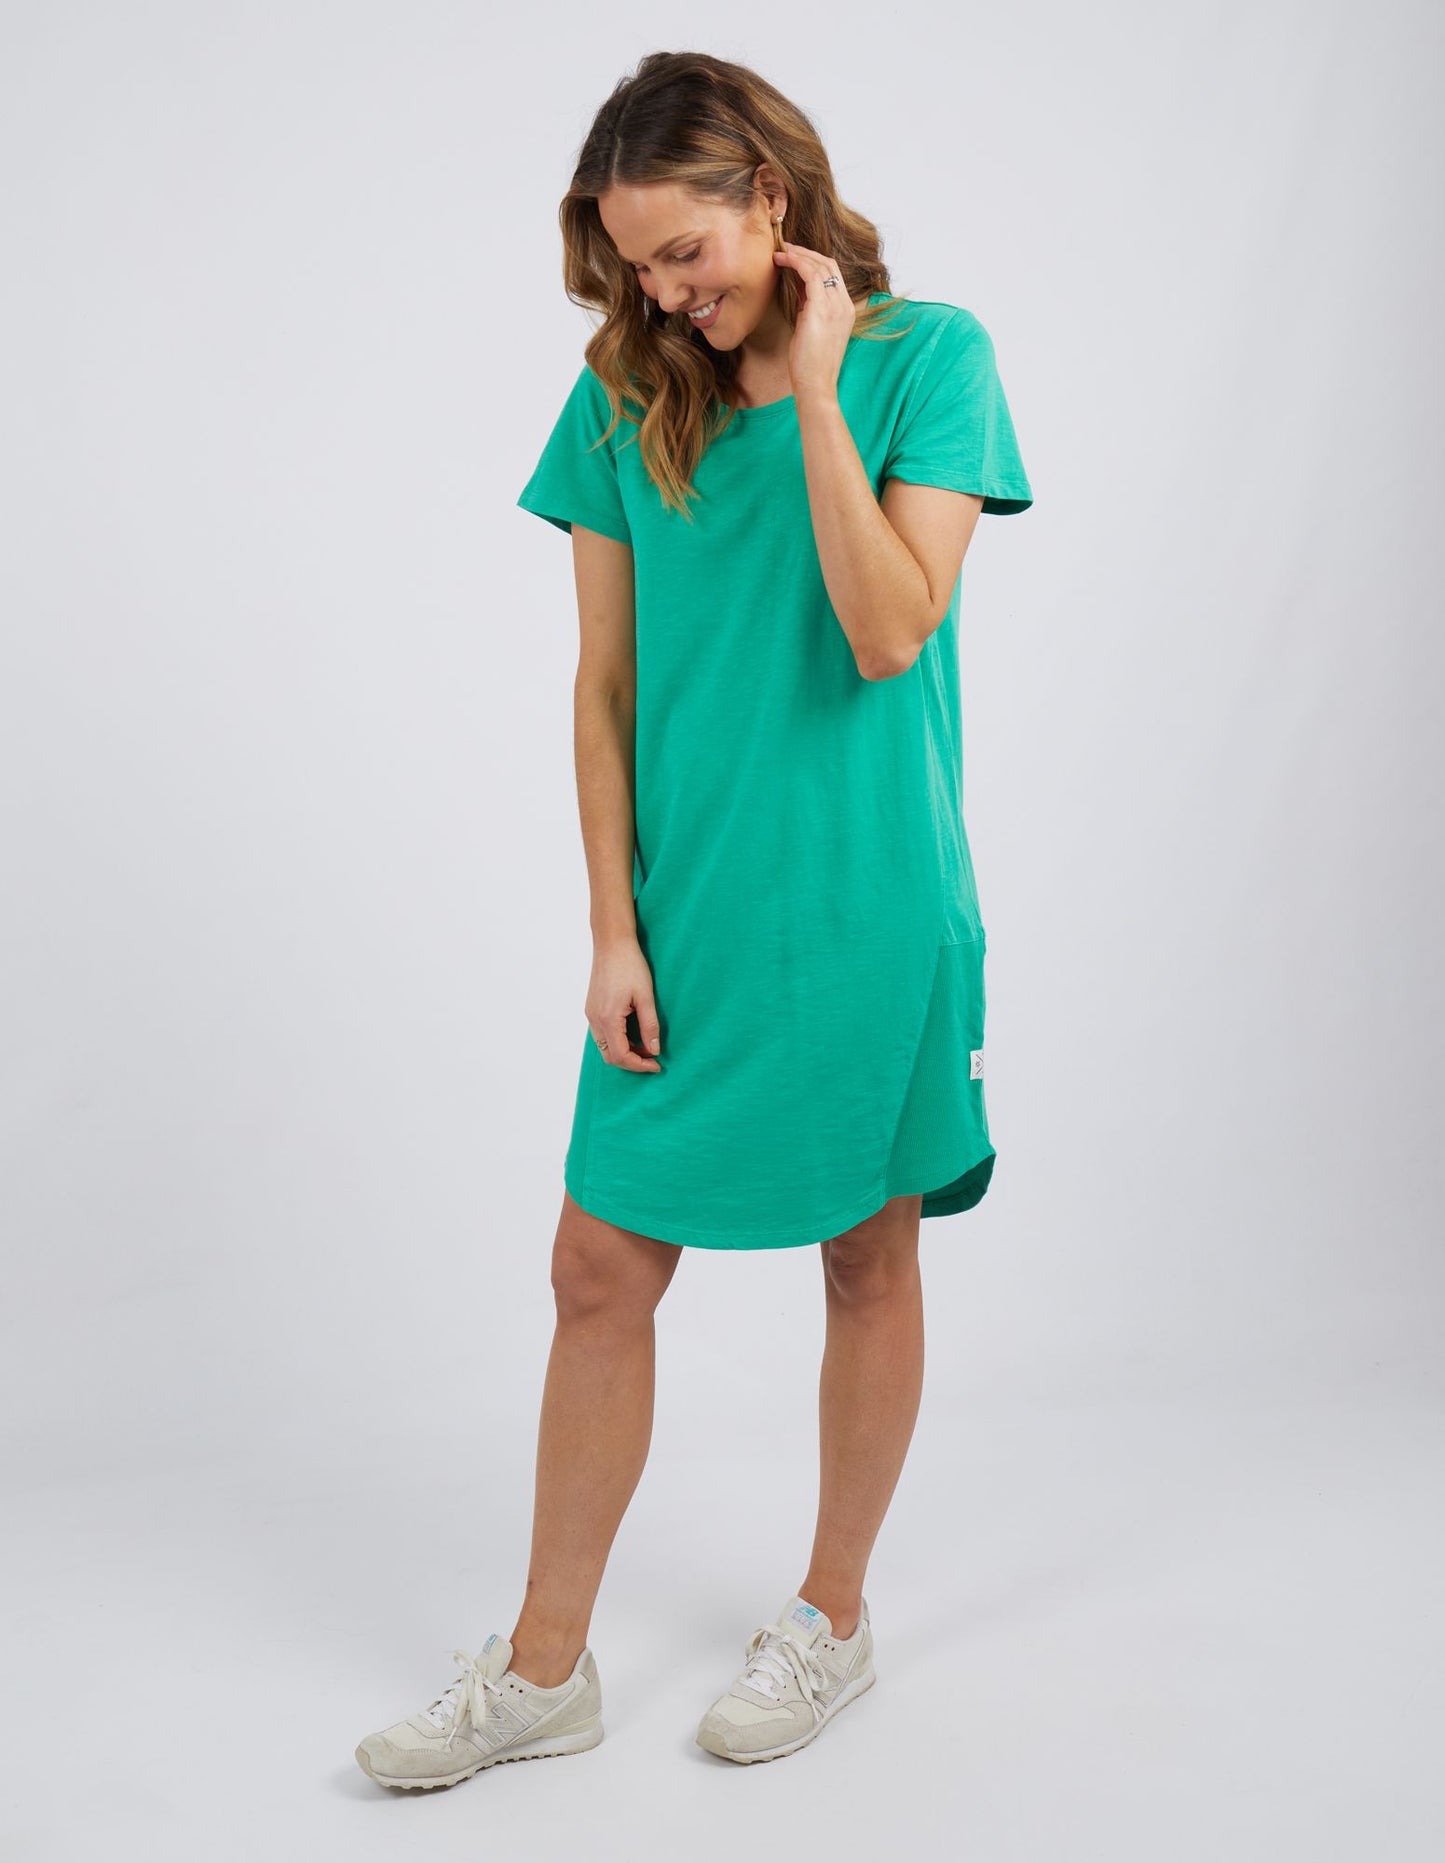 Easy Livin Dress - Bright Green - Elm Lifestyle